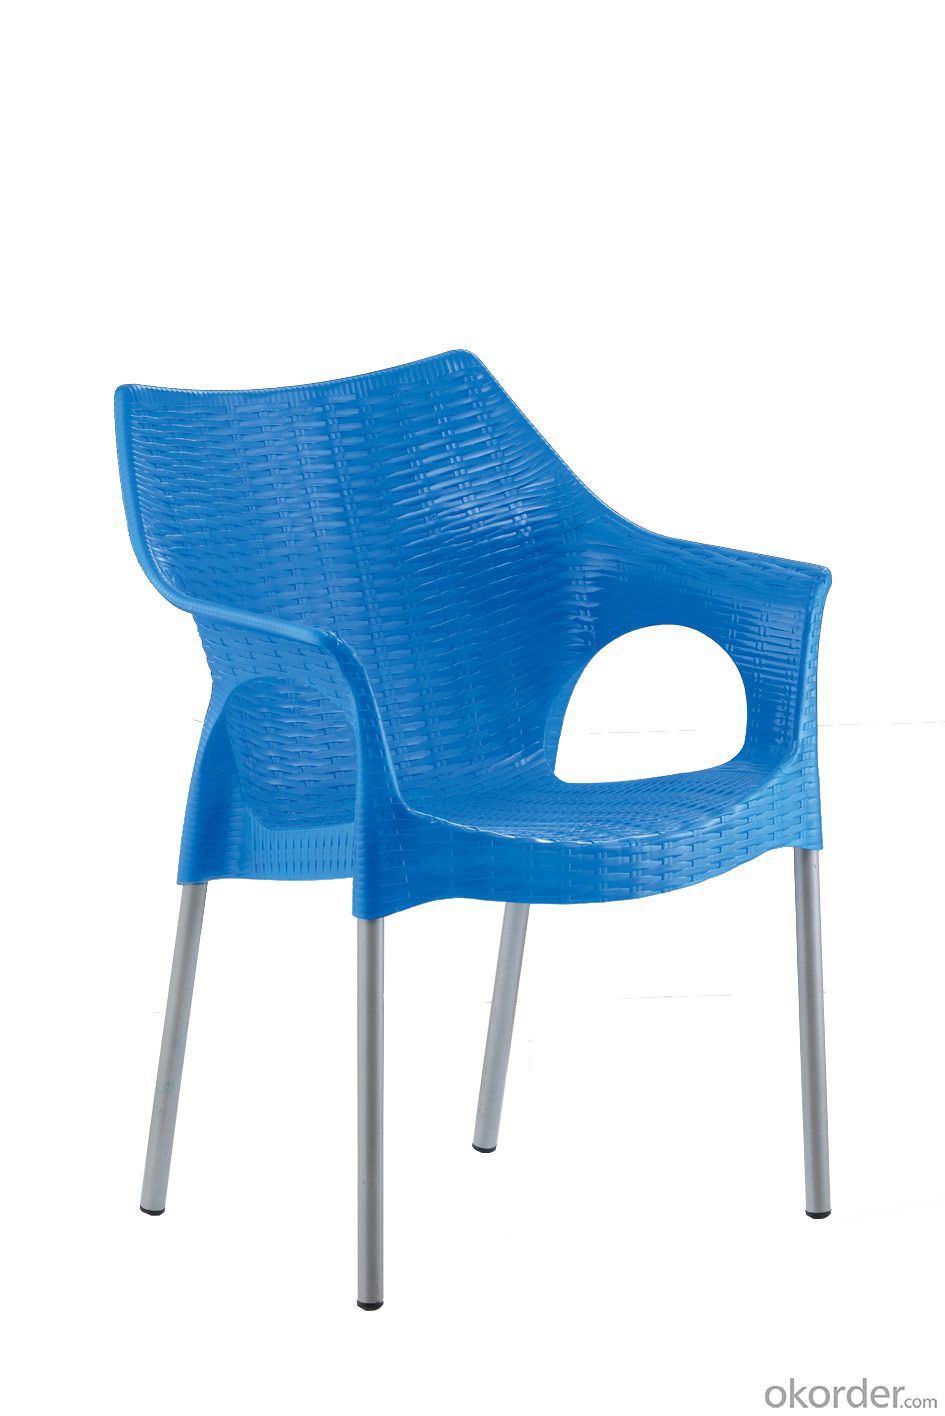 Backyard home outdoor plastic stackable chair